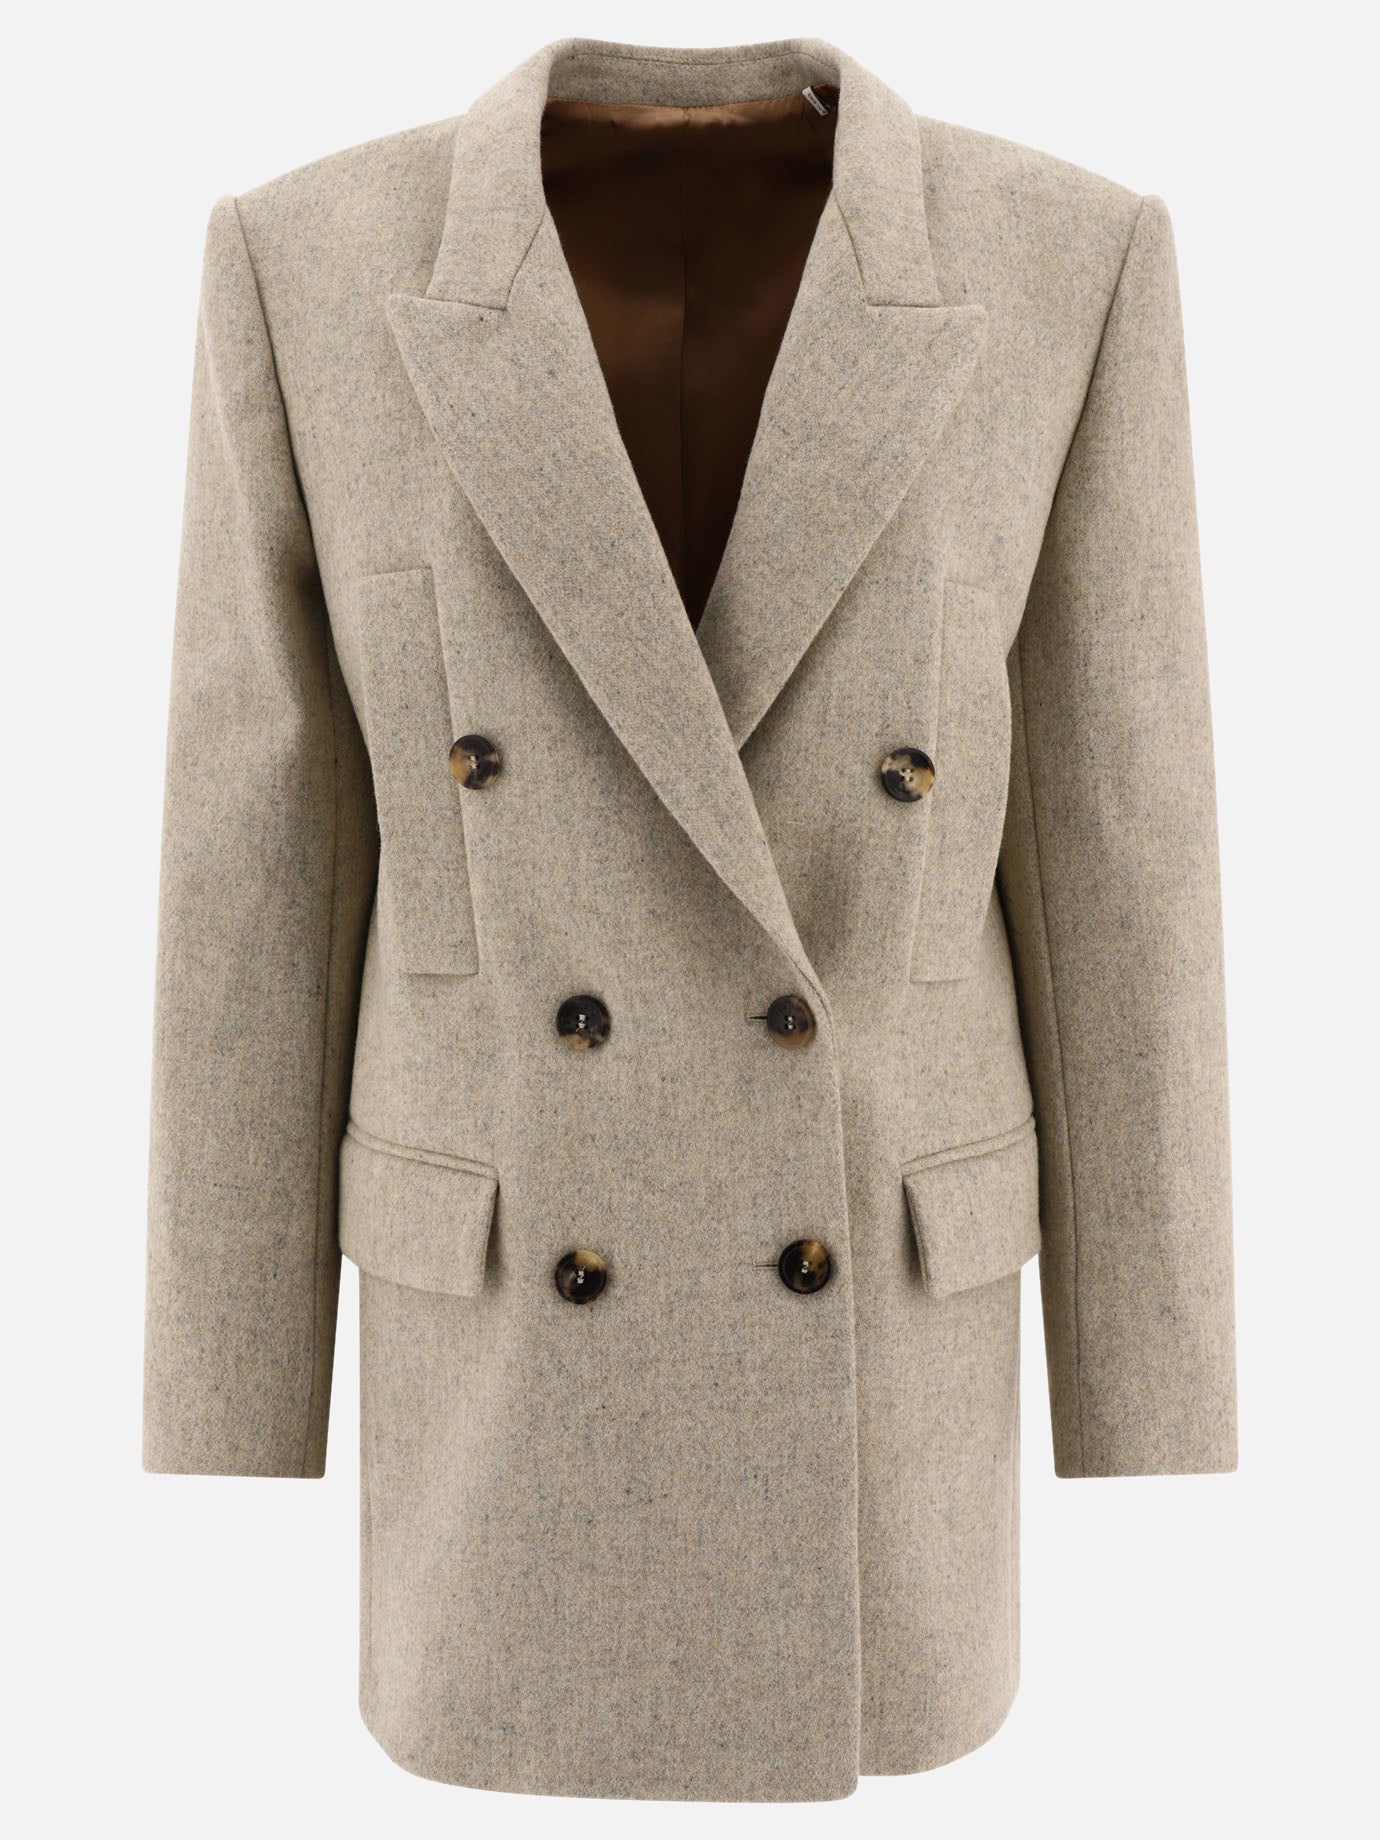 "Floyd" coat